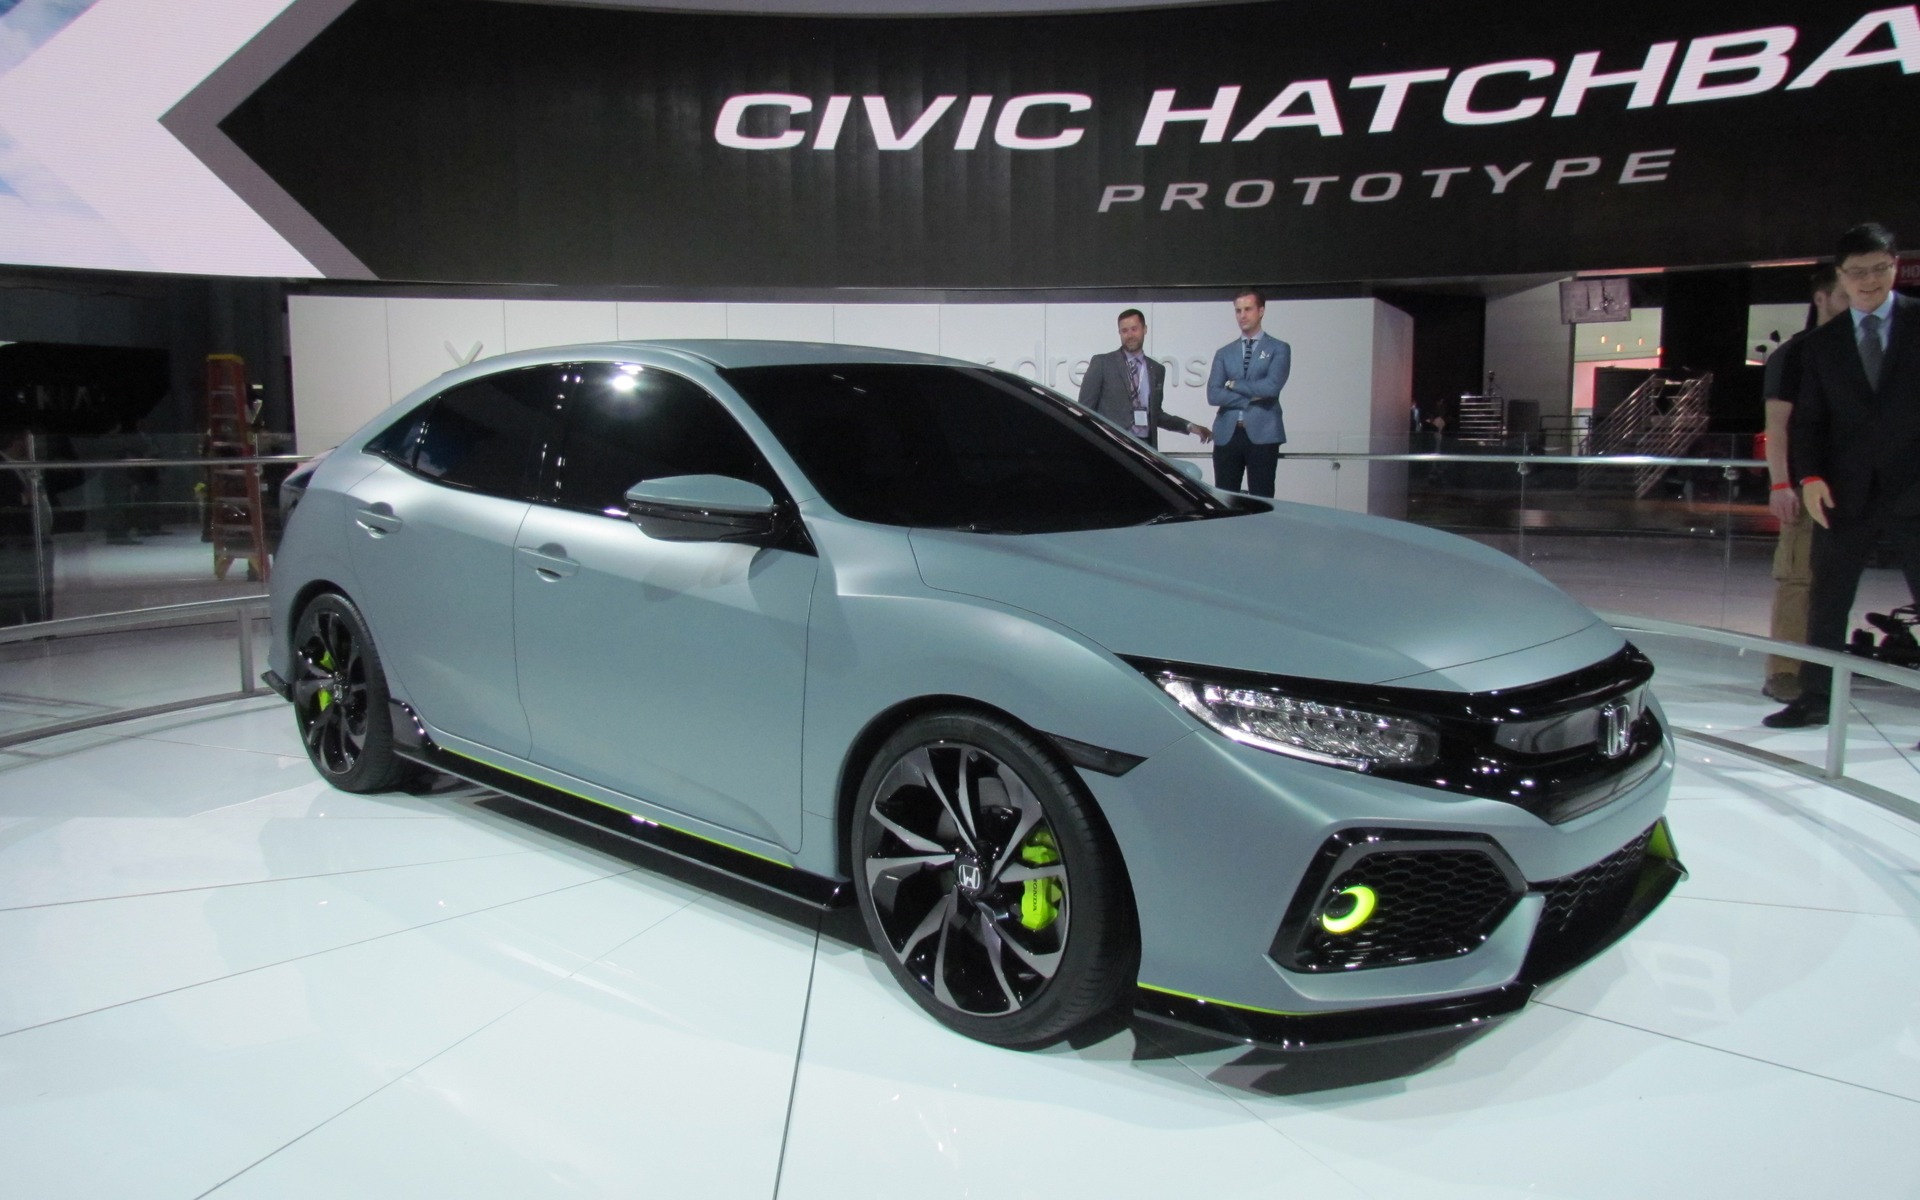 Honda Civic Hatchback